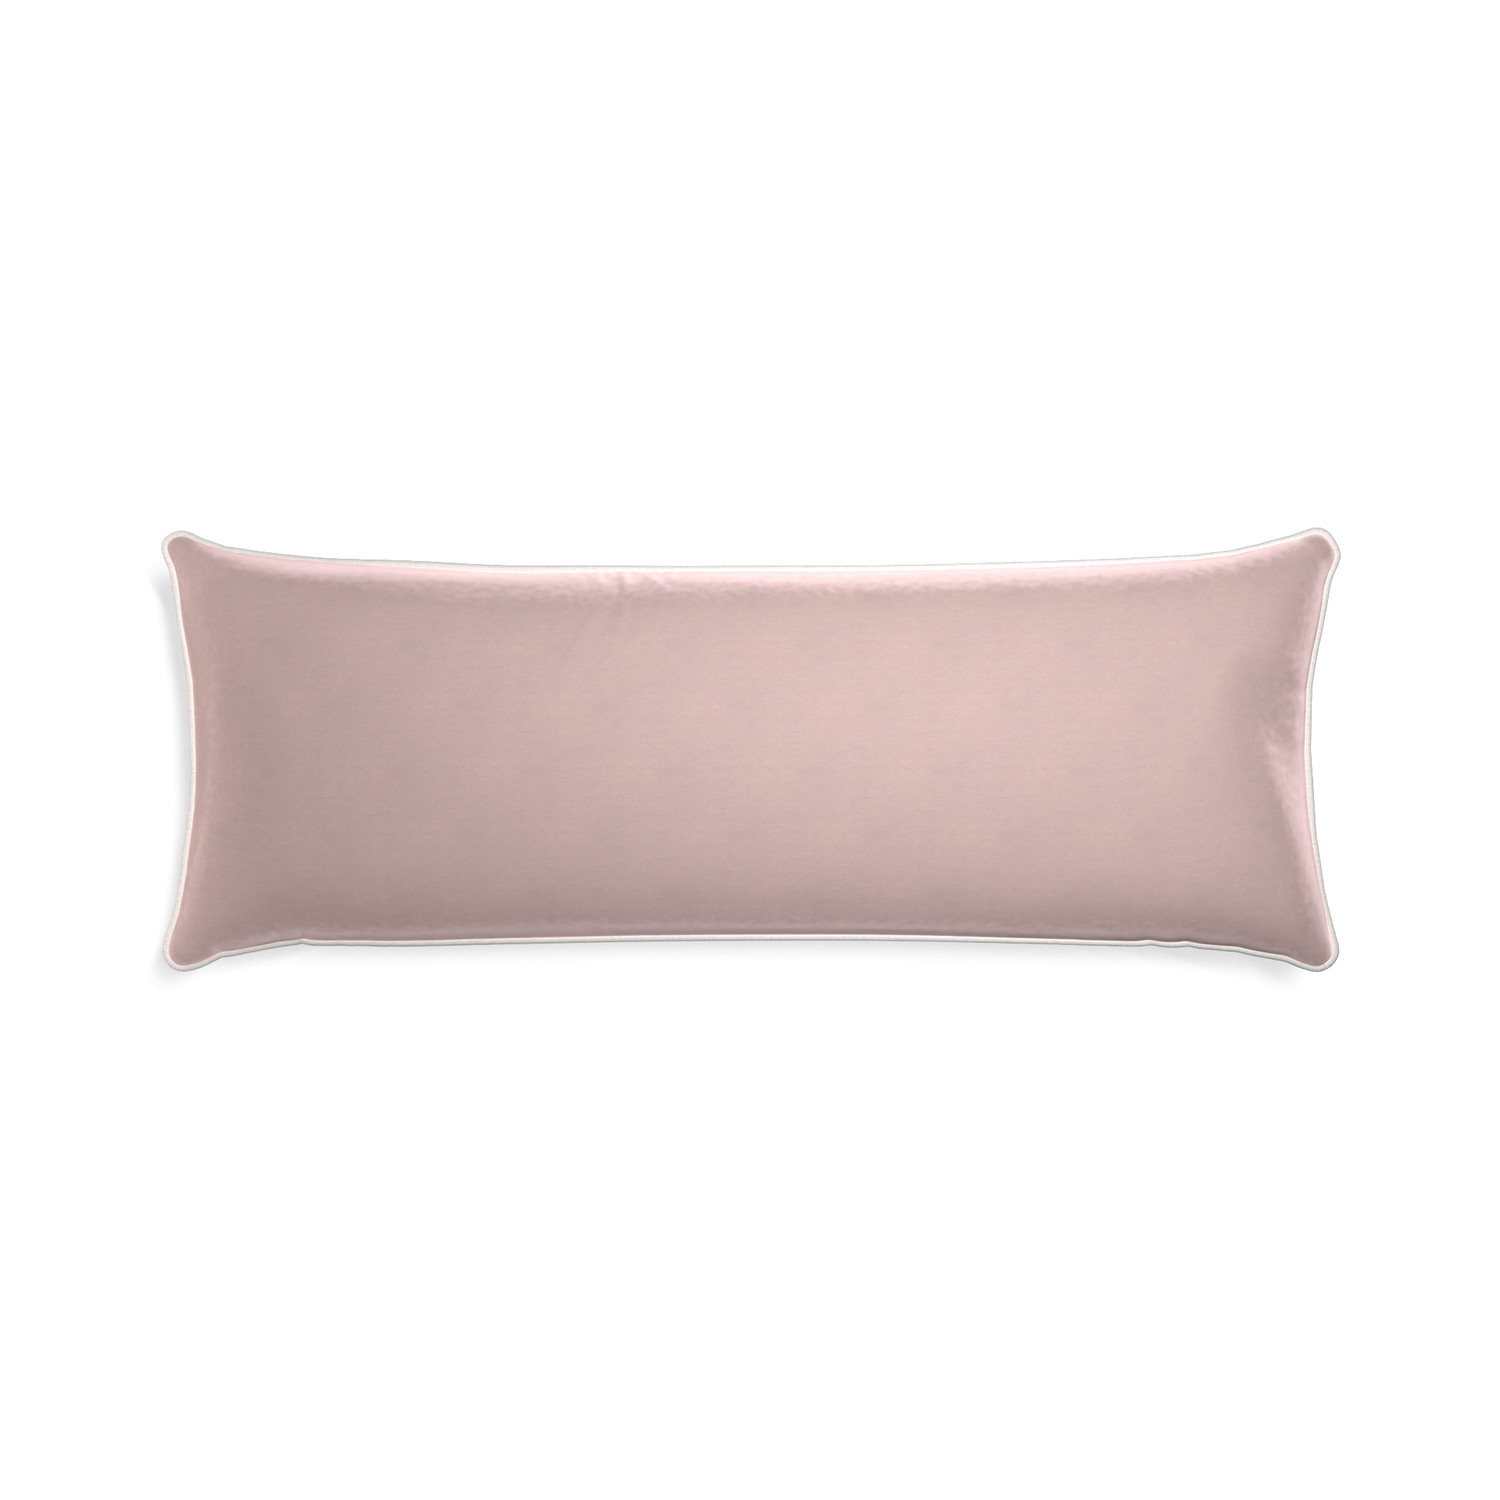 Xl-lumbar rose velvet custom pillow with snow piping on white background